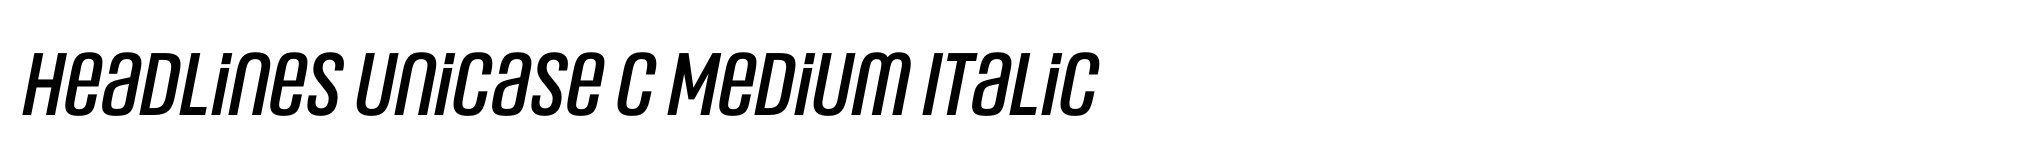 Headlines Unicase C Medium Italic image